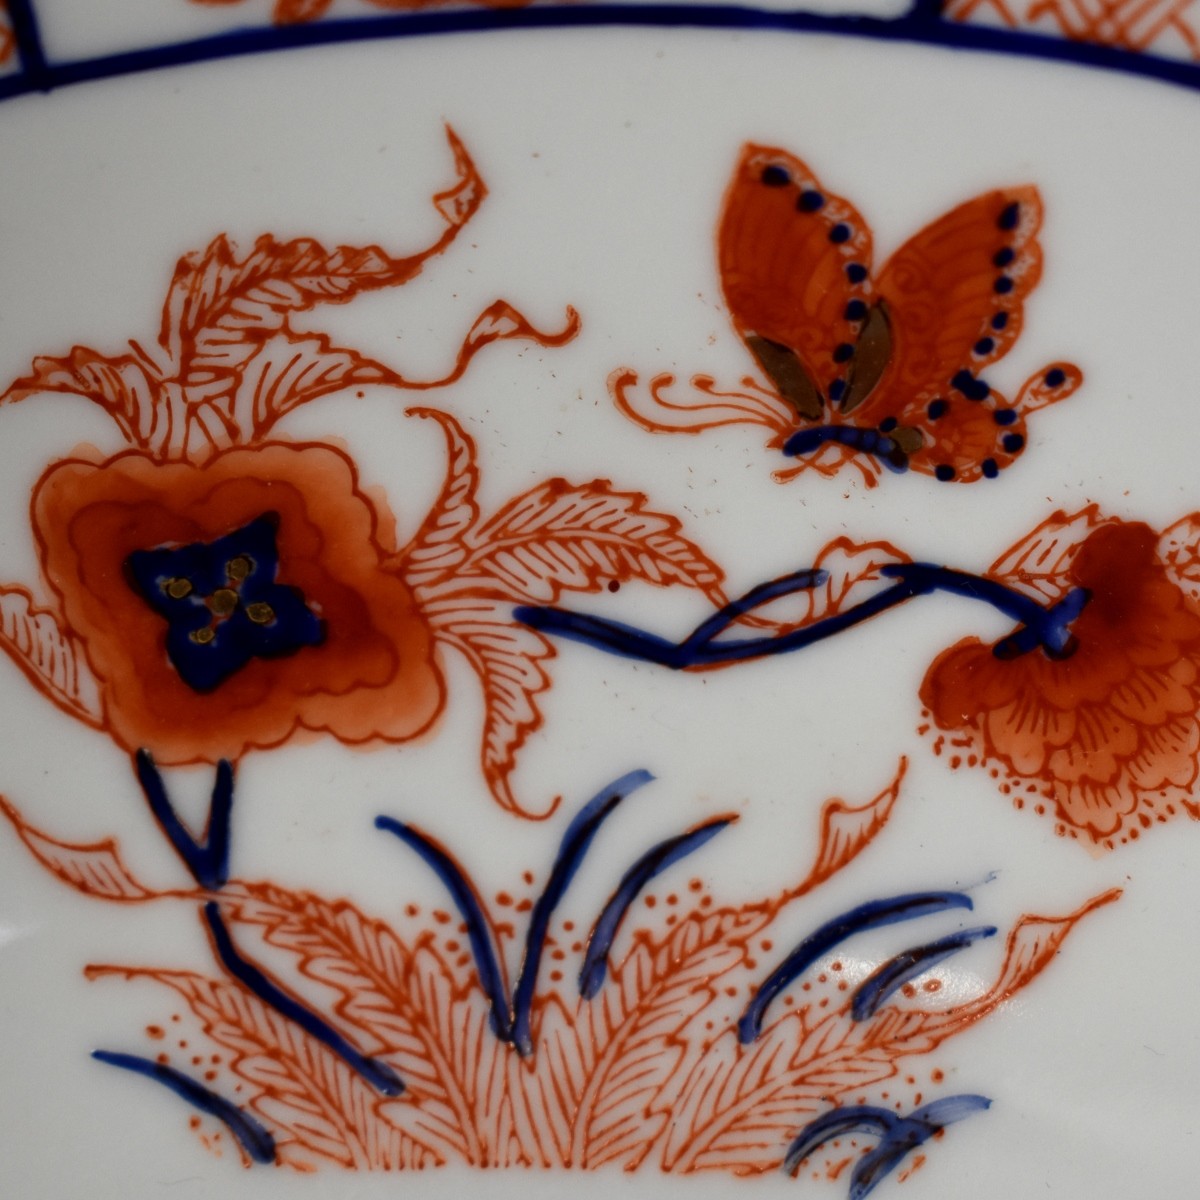 Chinese Imari Bowl and Inset Jade Box Tableware